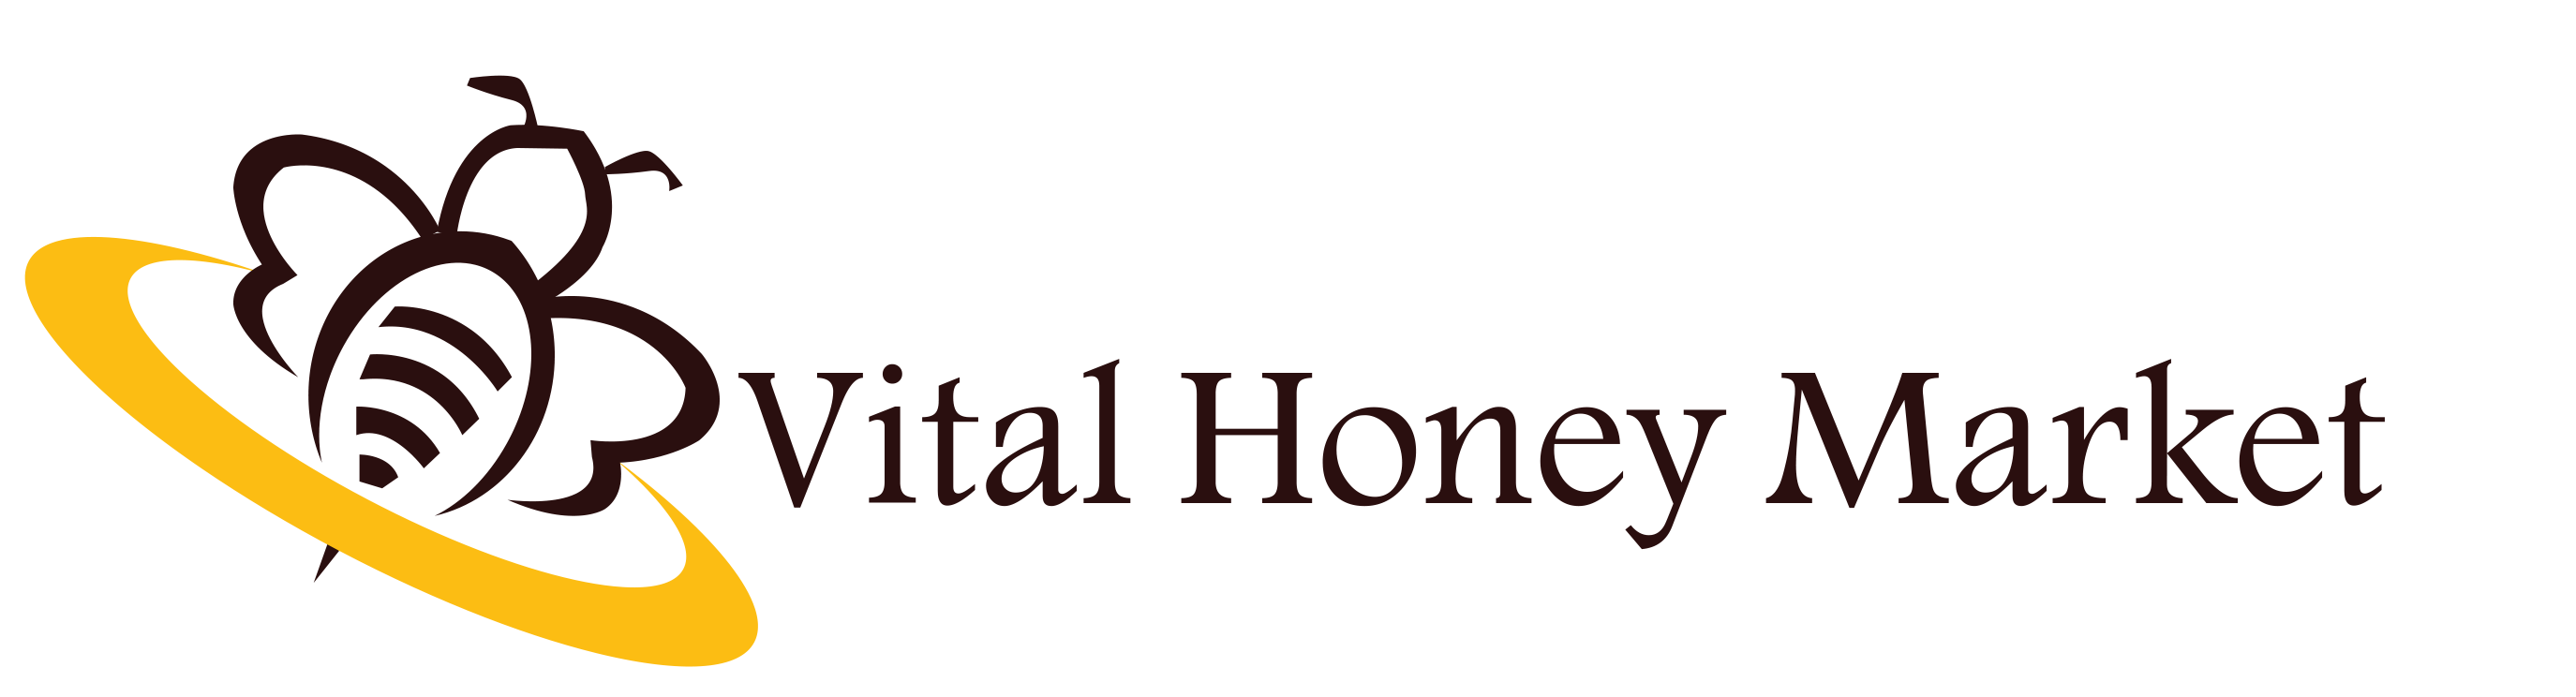 vital honey market logo